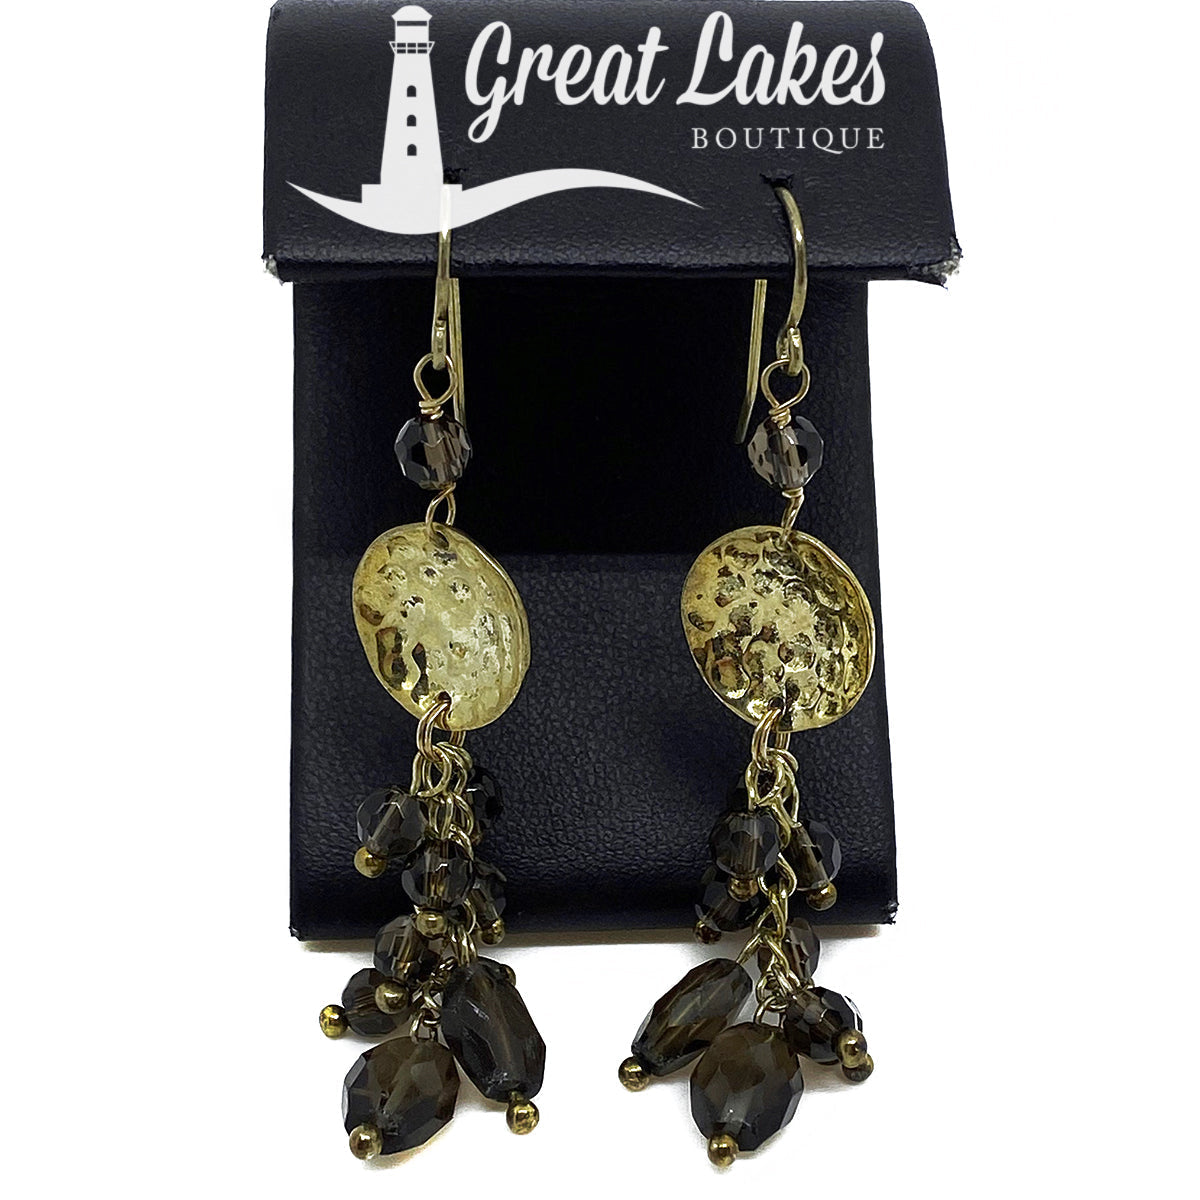 Great Lakes Boutique Lucas Lameth Vintage Silver Earrings